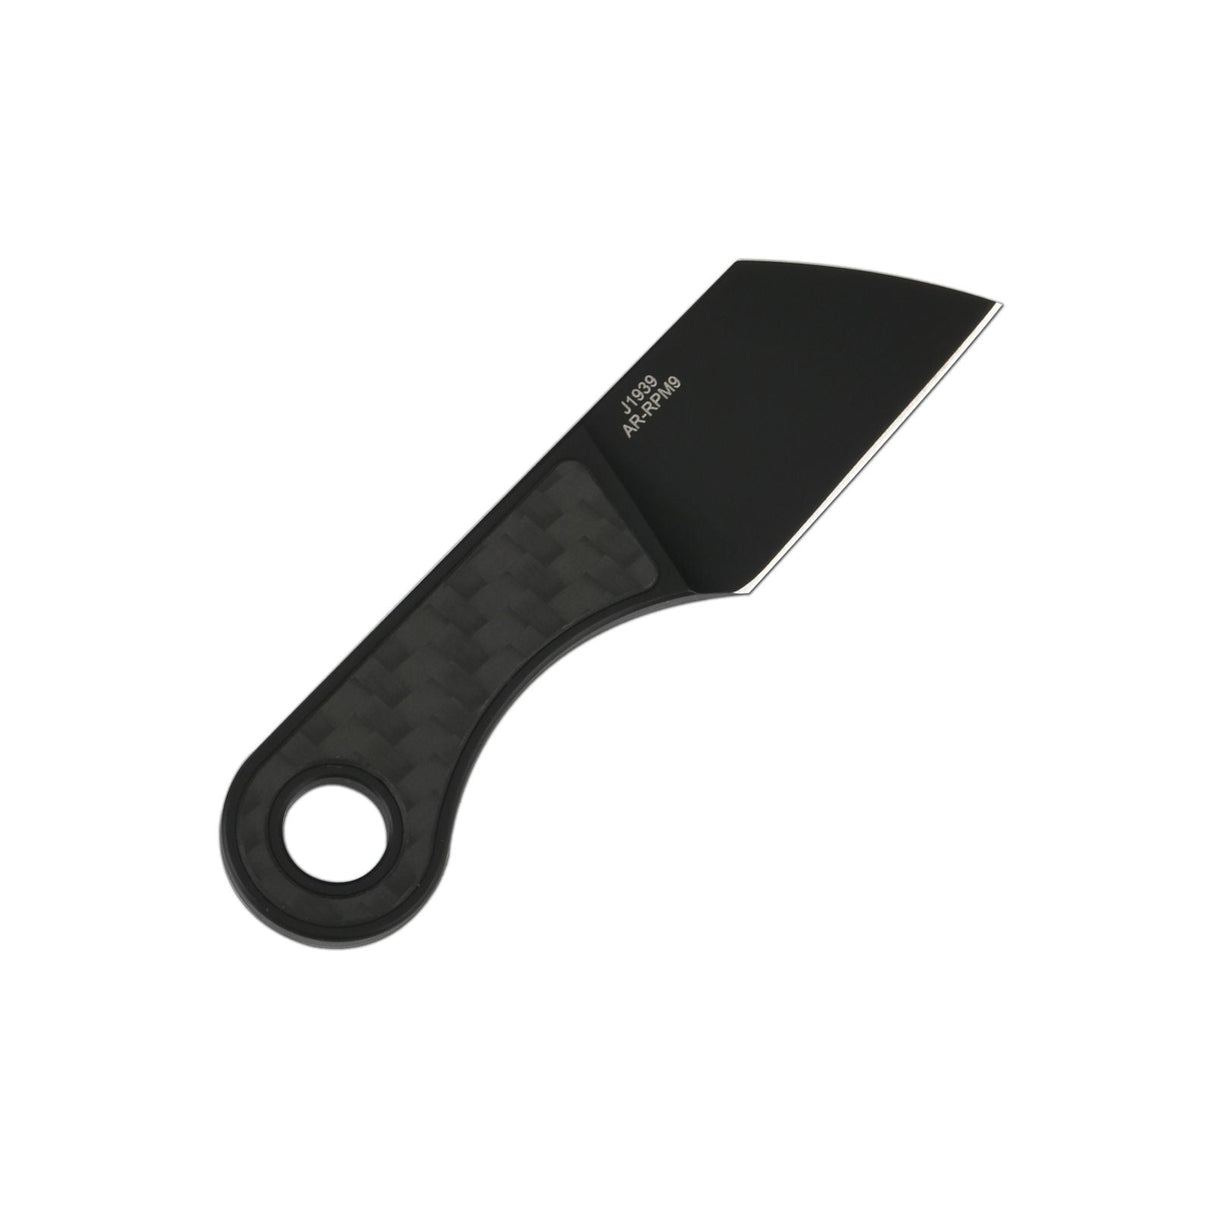 CJRB Chip J1939 AR-RPM9 Steel Blade G10/Carbon fiber Handle Fixed Blade Knives